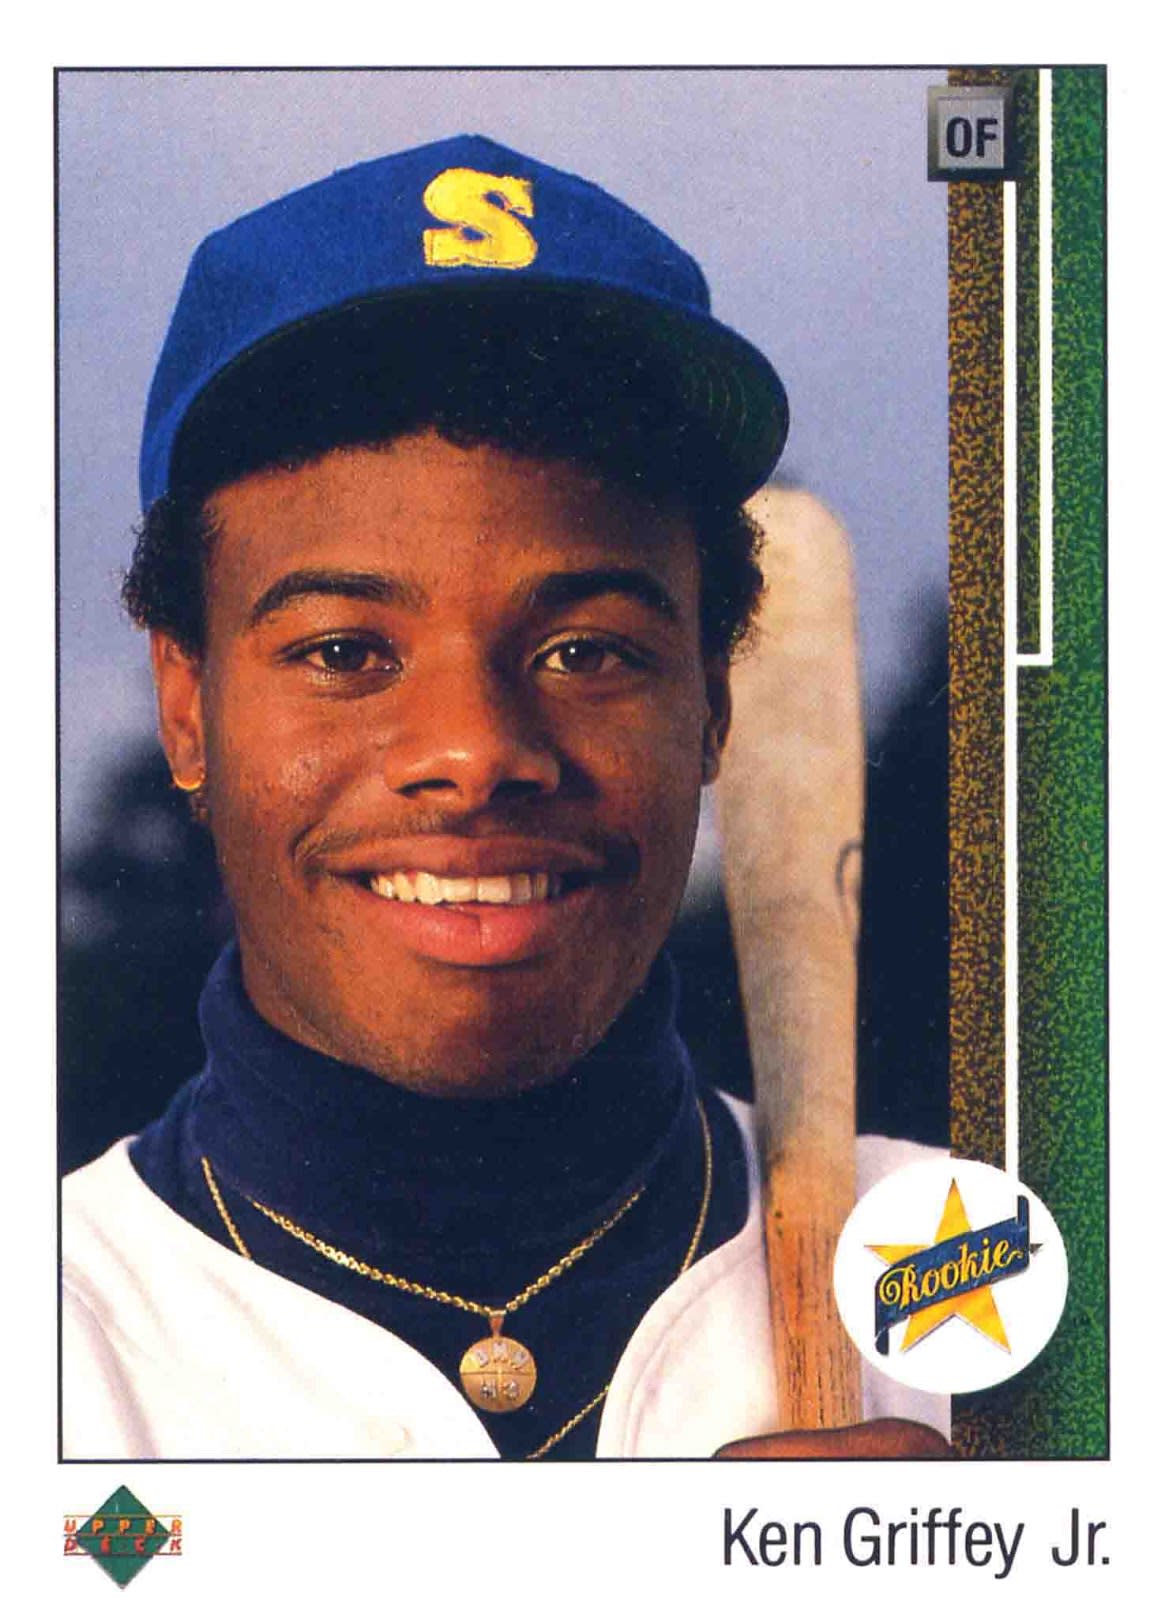 1989 Upper Deck Ken Griffey Jr. Card Was Actually Minor League Photo